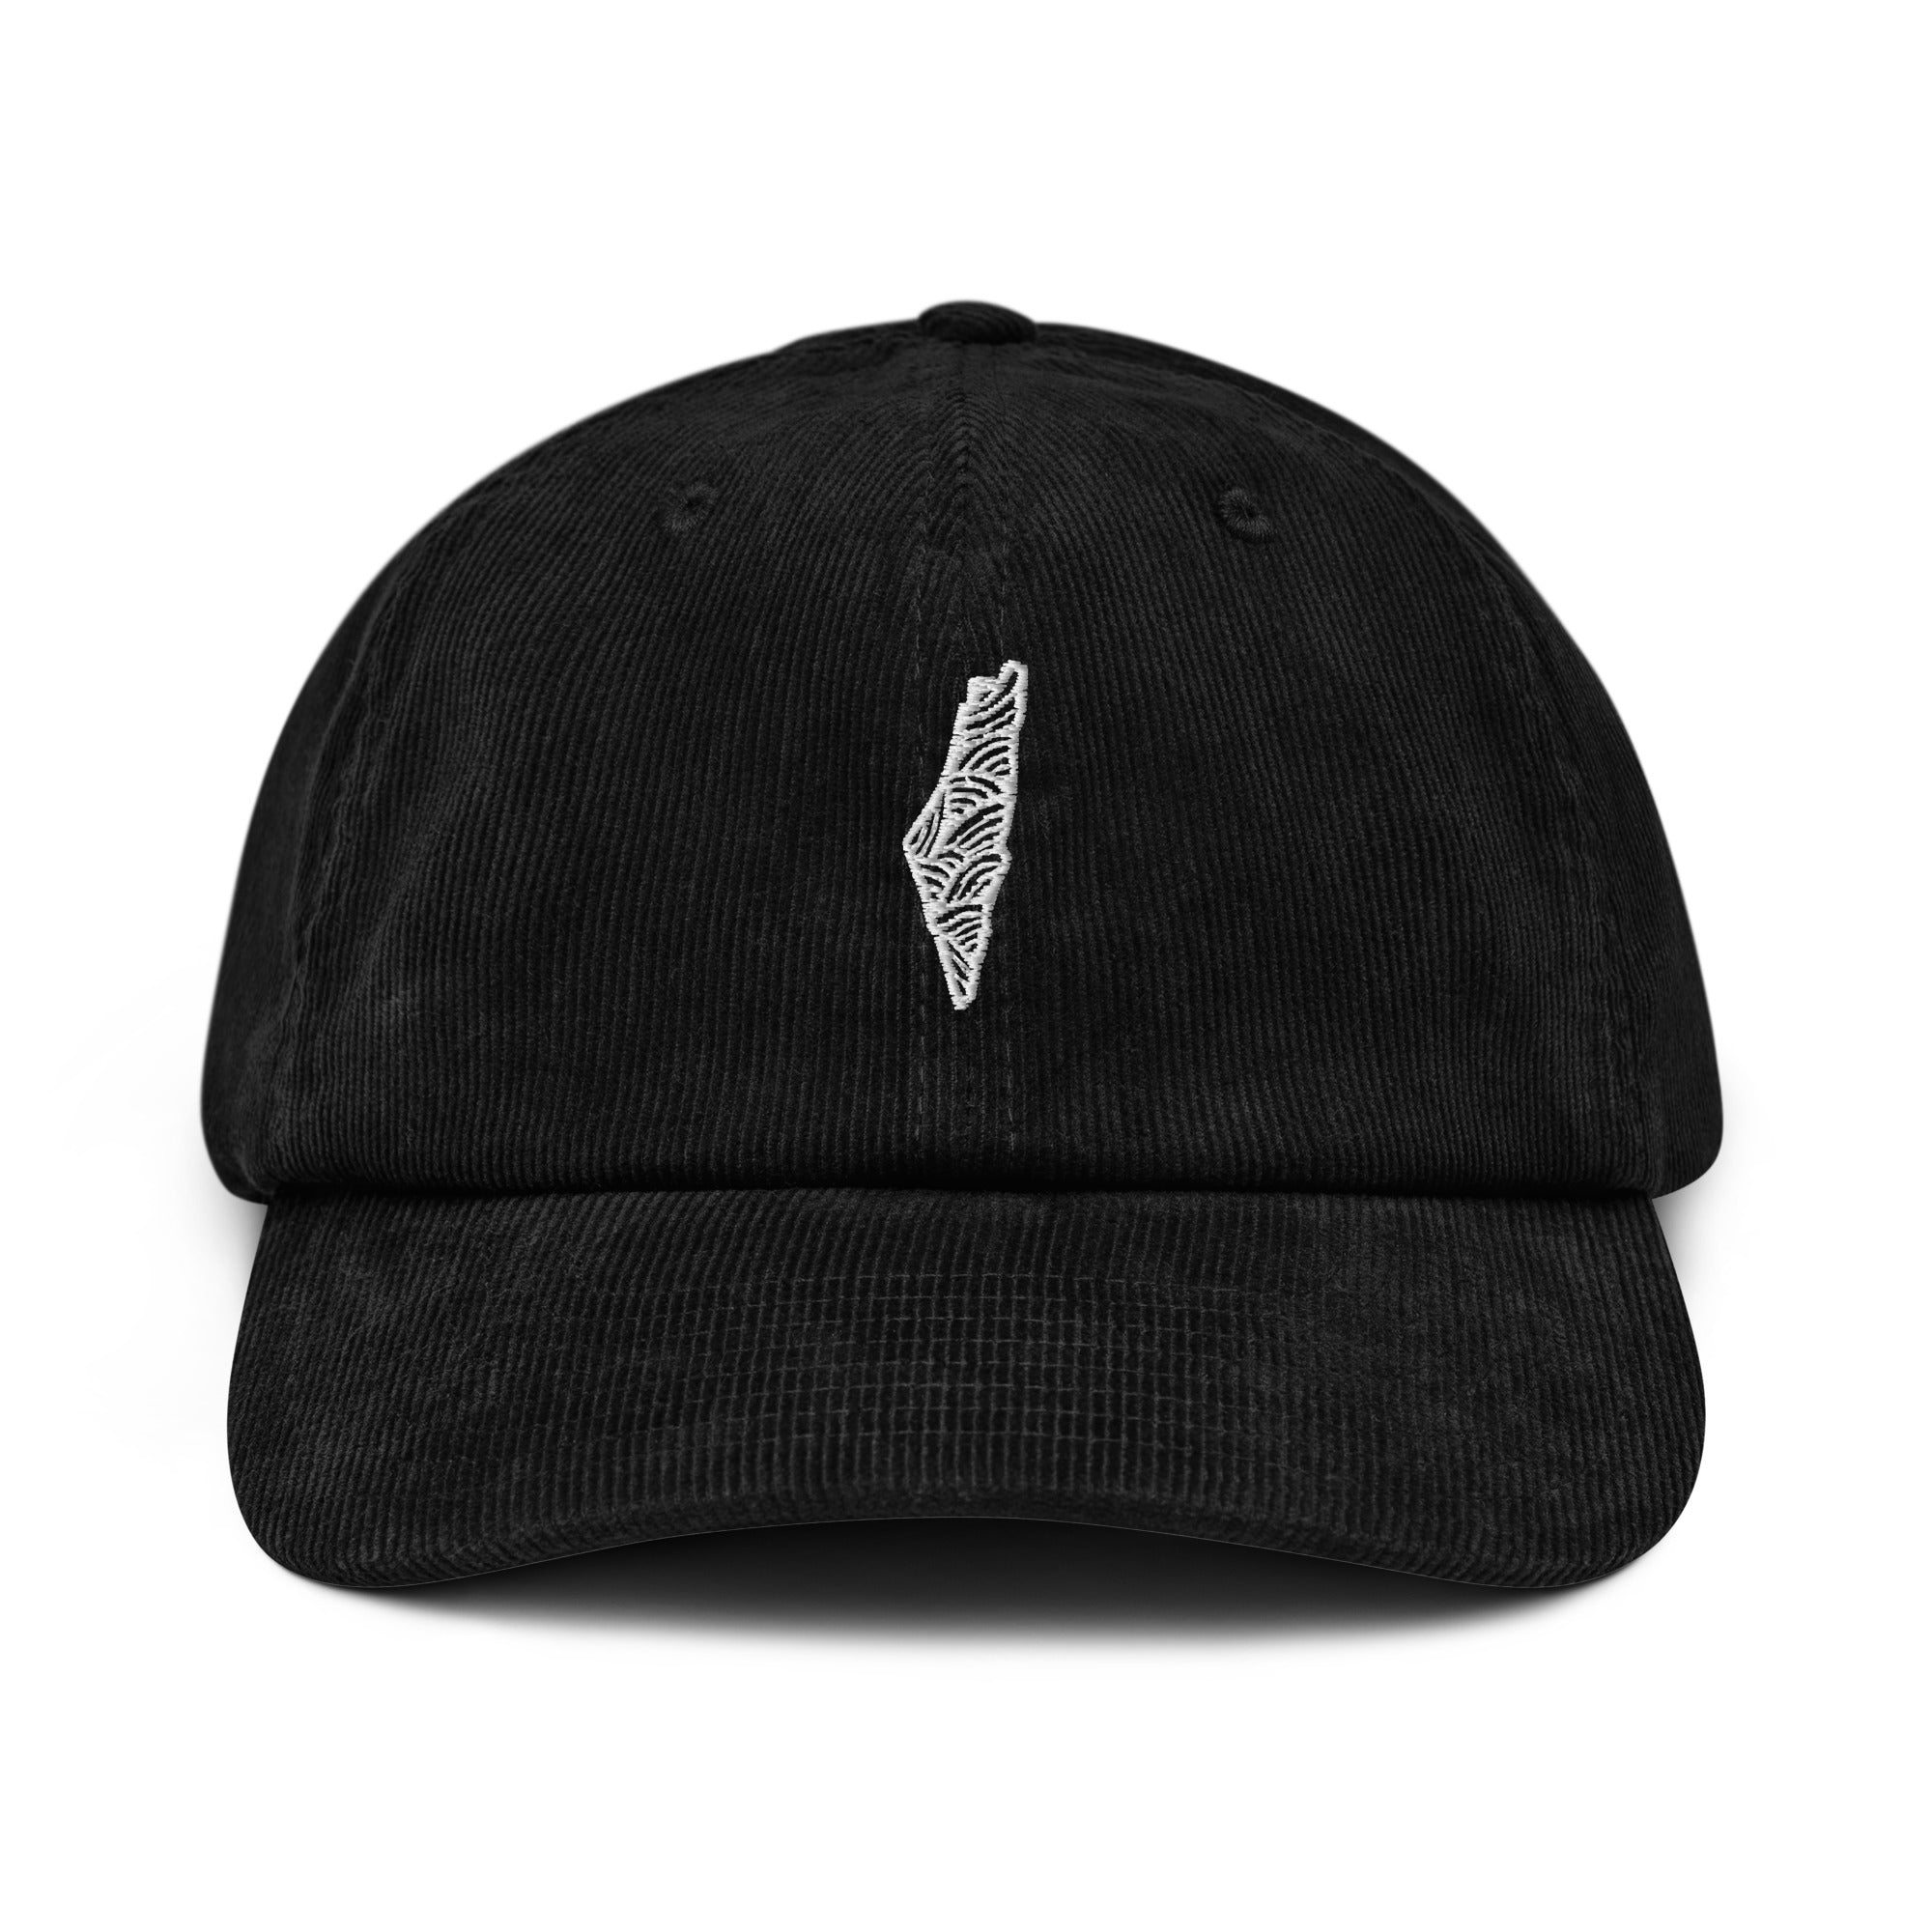 corduroy-hat-black-front-66587c2e5be0a.jpg